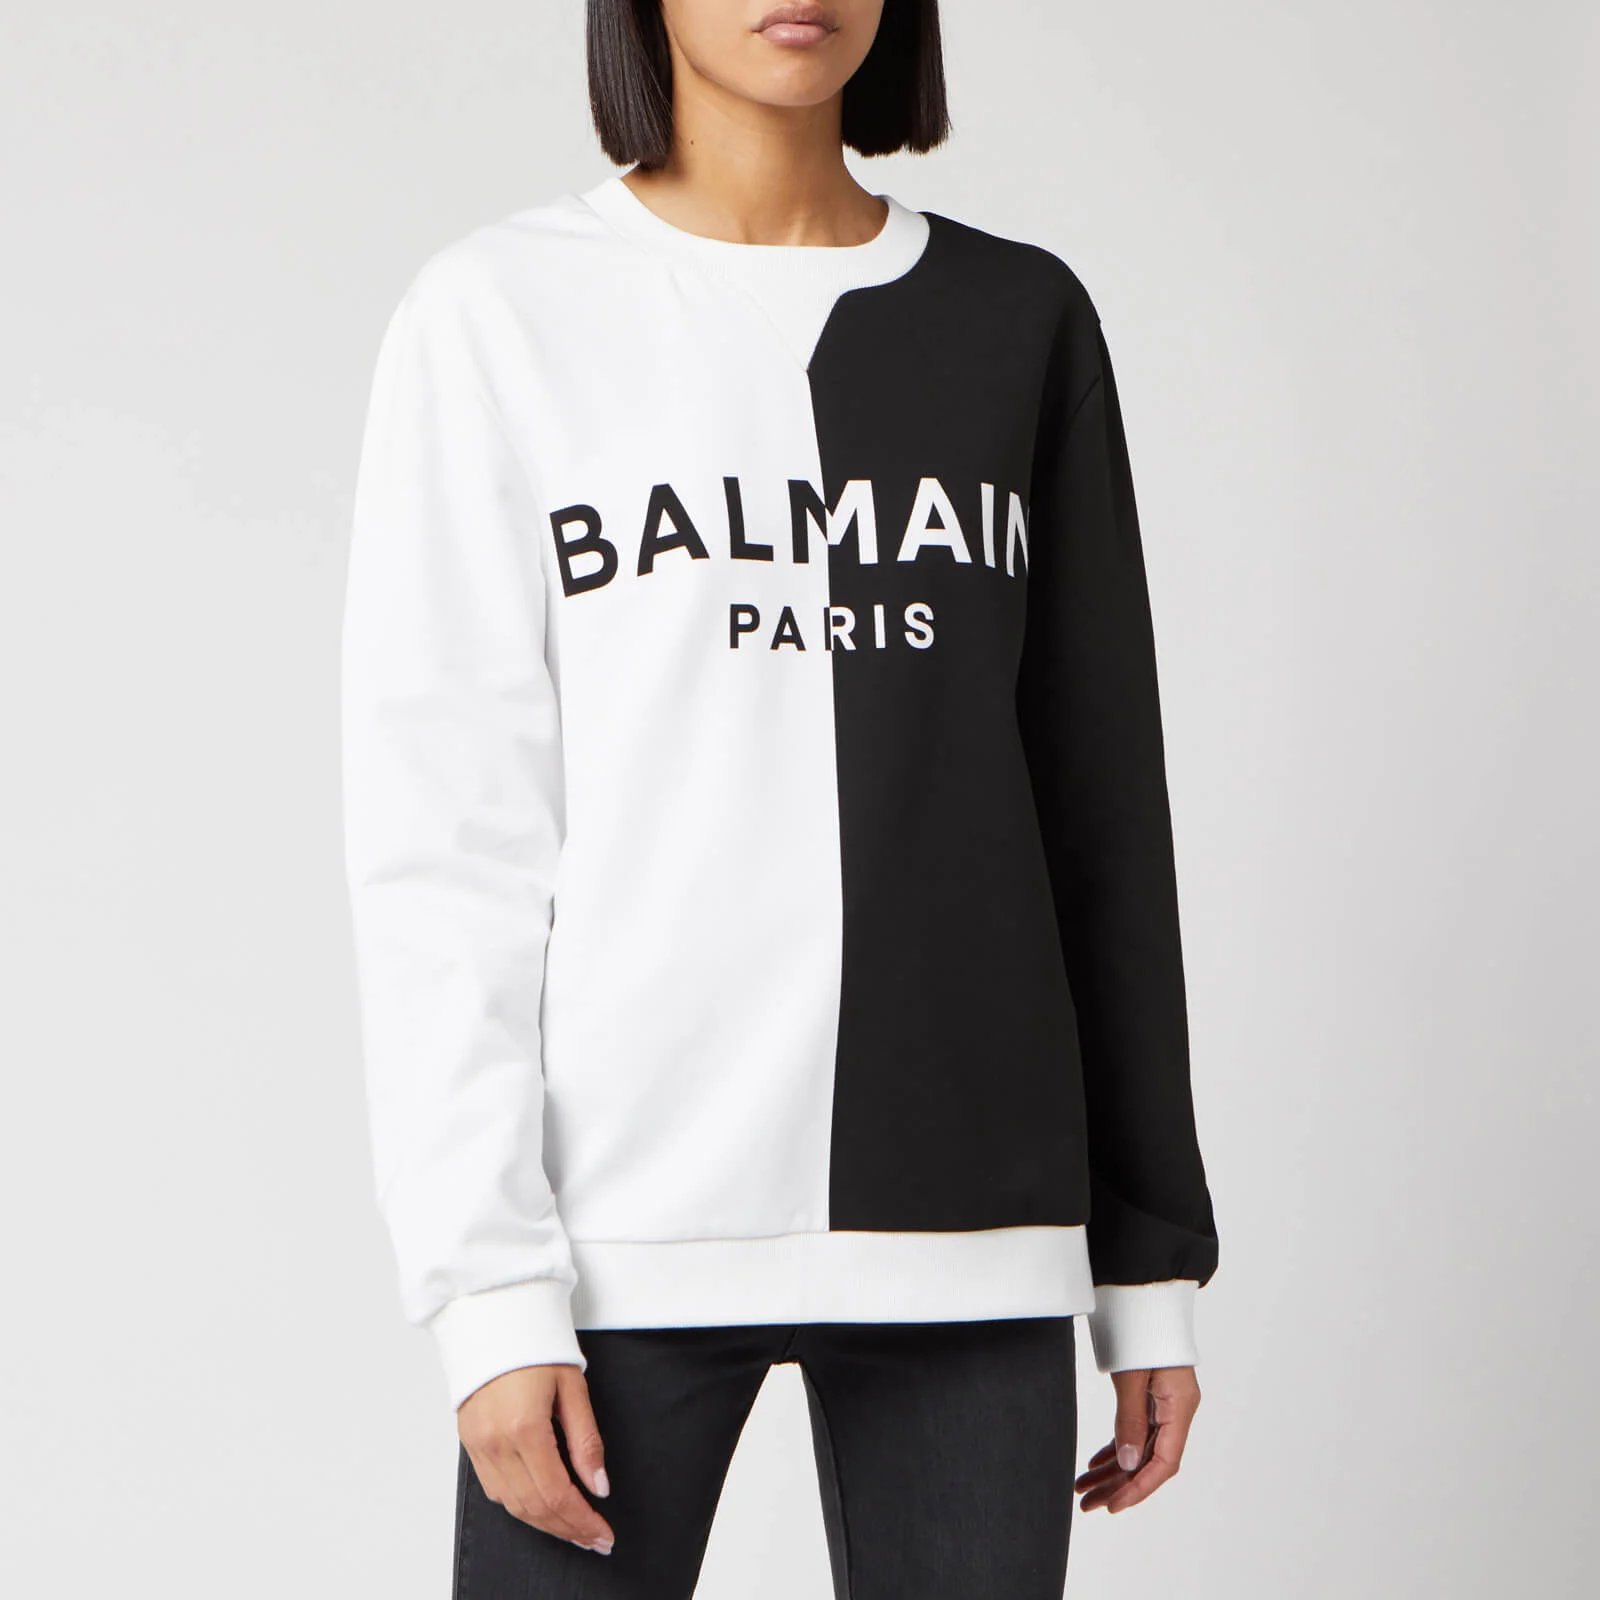 Balmain Women's Bicolored Logo Sweatshirt - White/Black Image 1